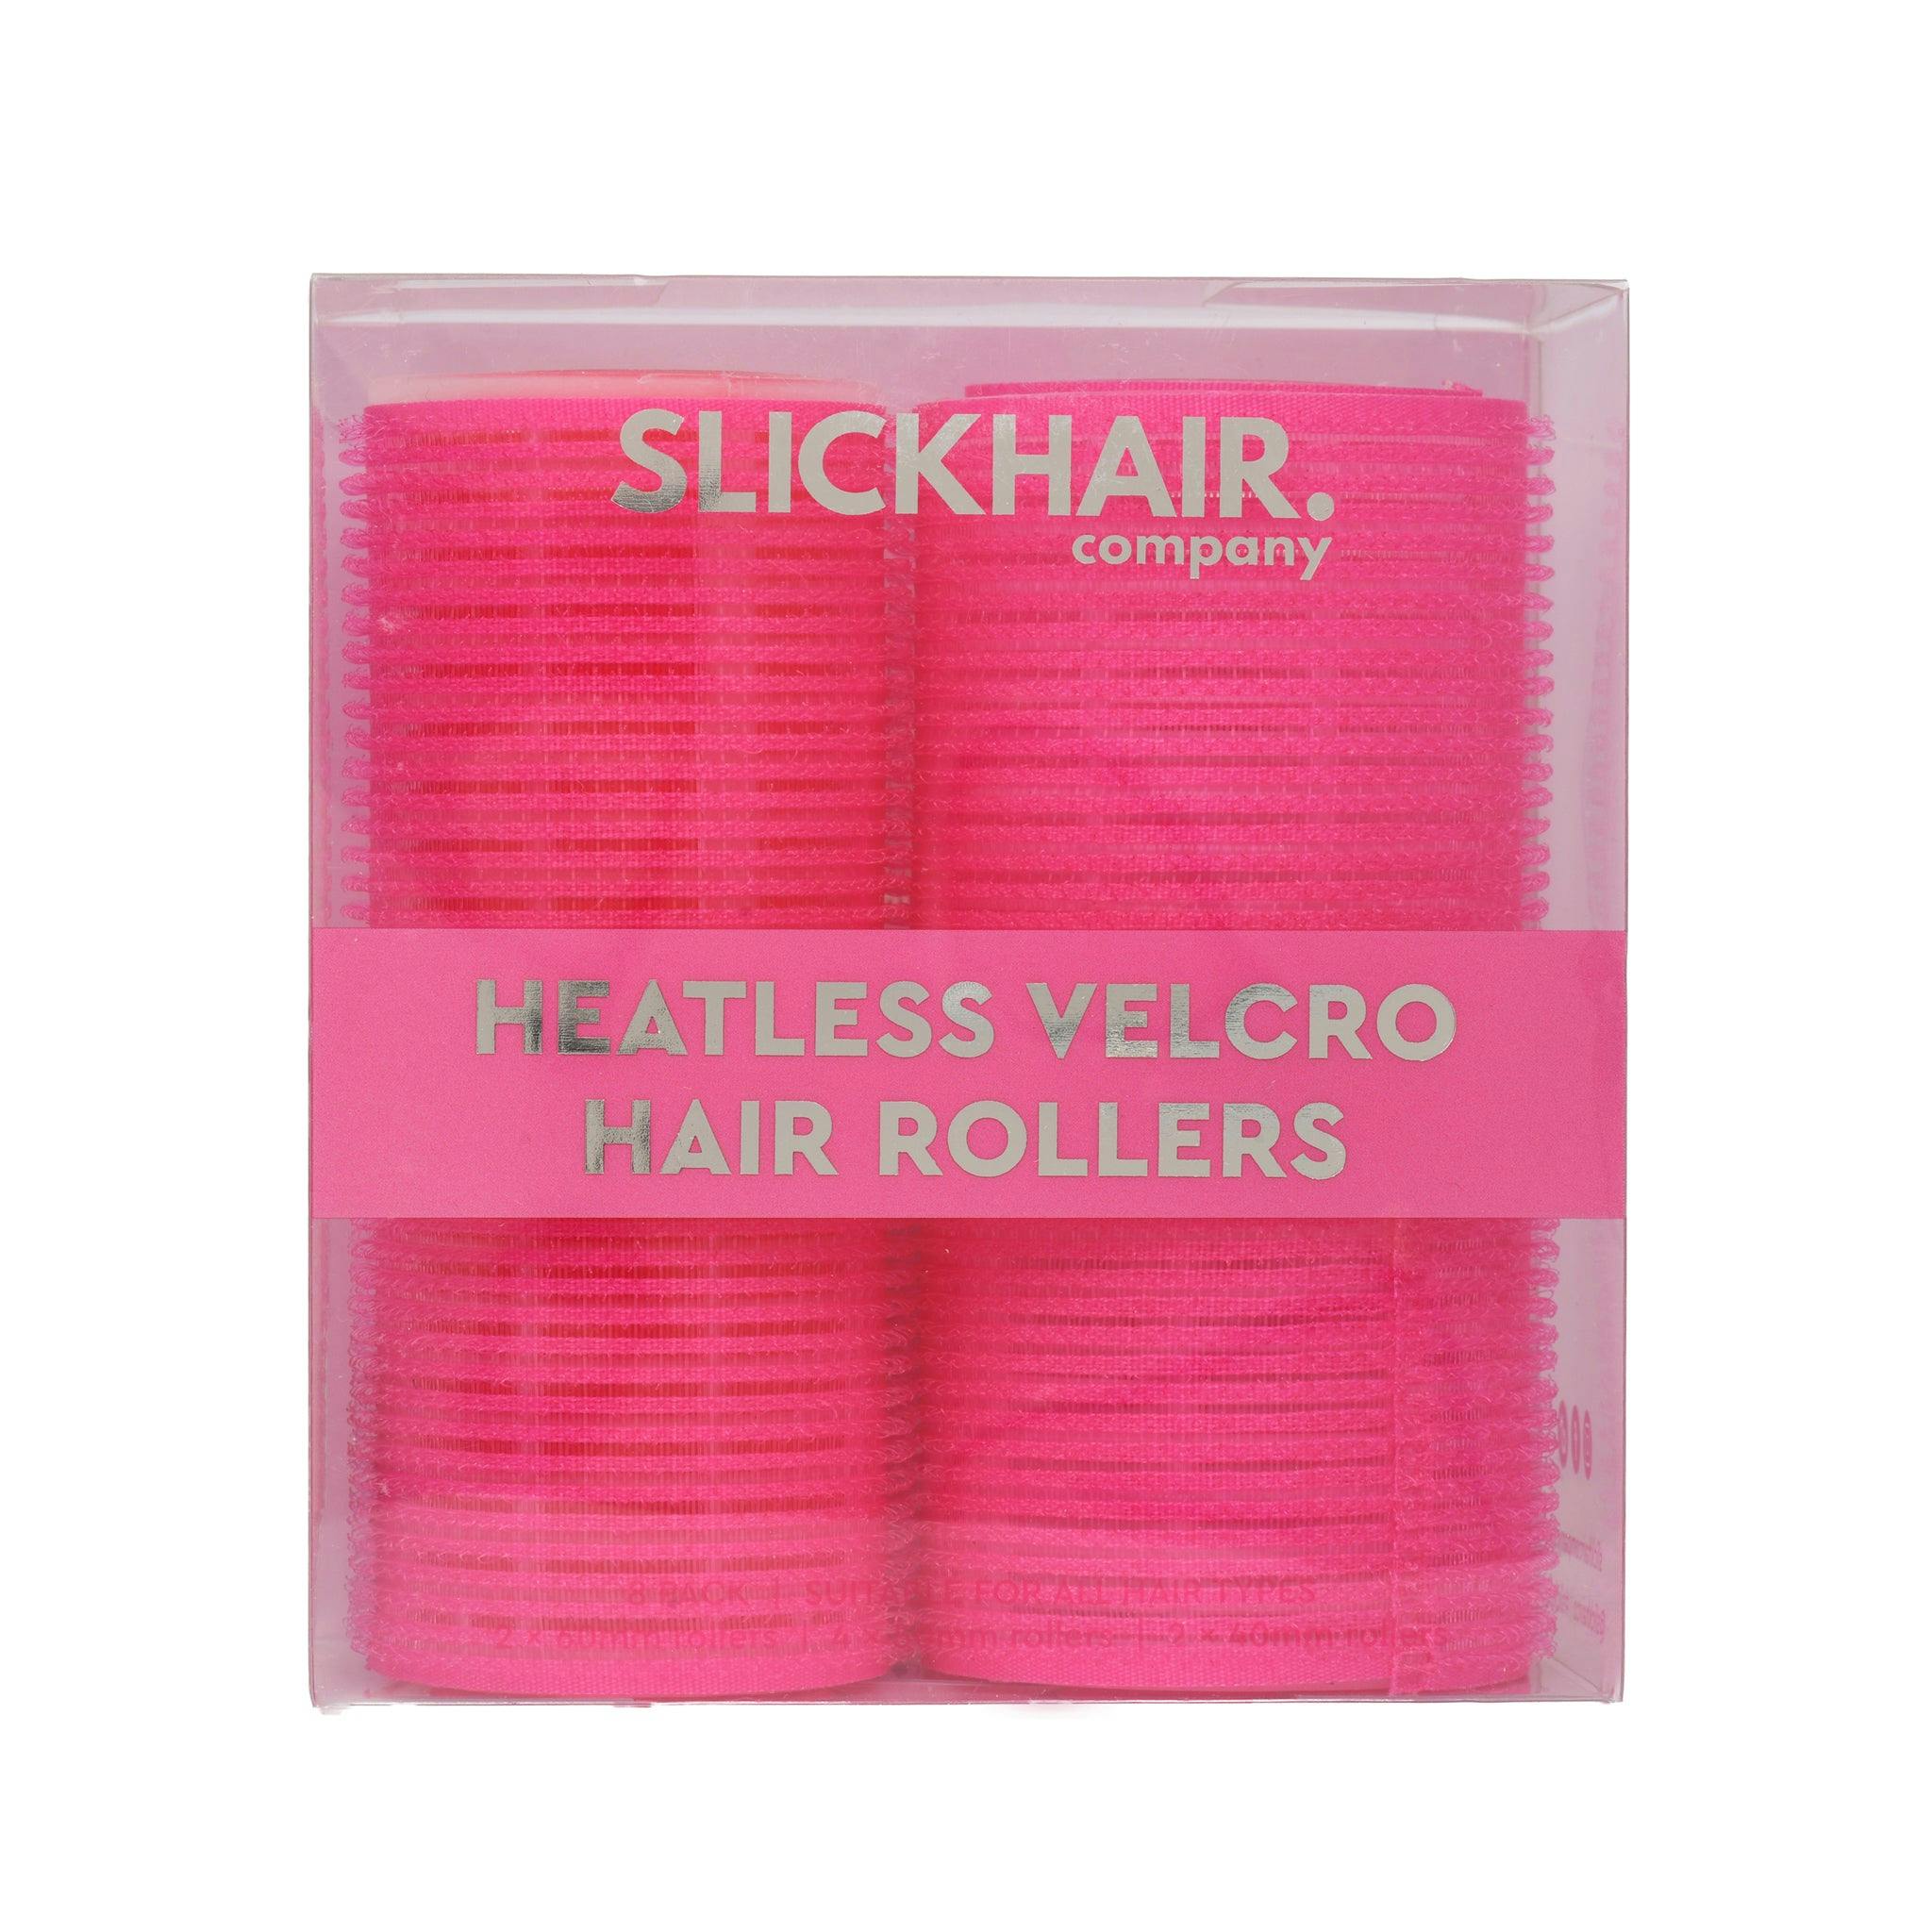 Slick Hair Company Heatless Velcro Hair Rollers (8 Pack)